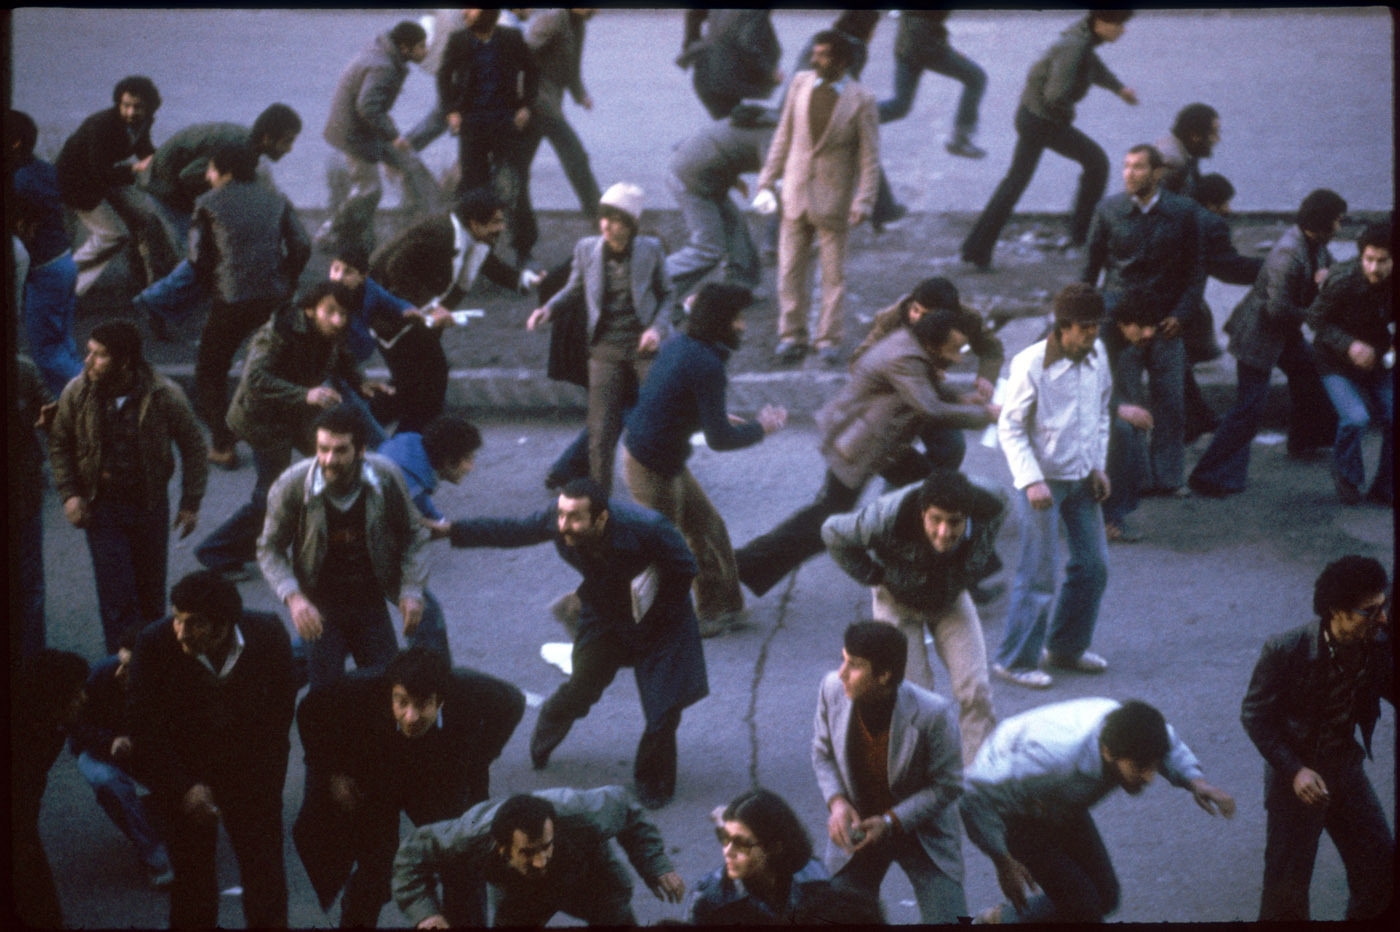 Watching crowds scatter when police gunfire erupts. : 44 Days: the Iranian Revolution : David Burnett | Photographer